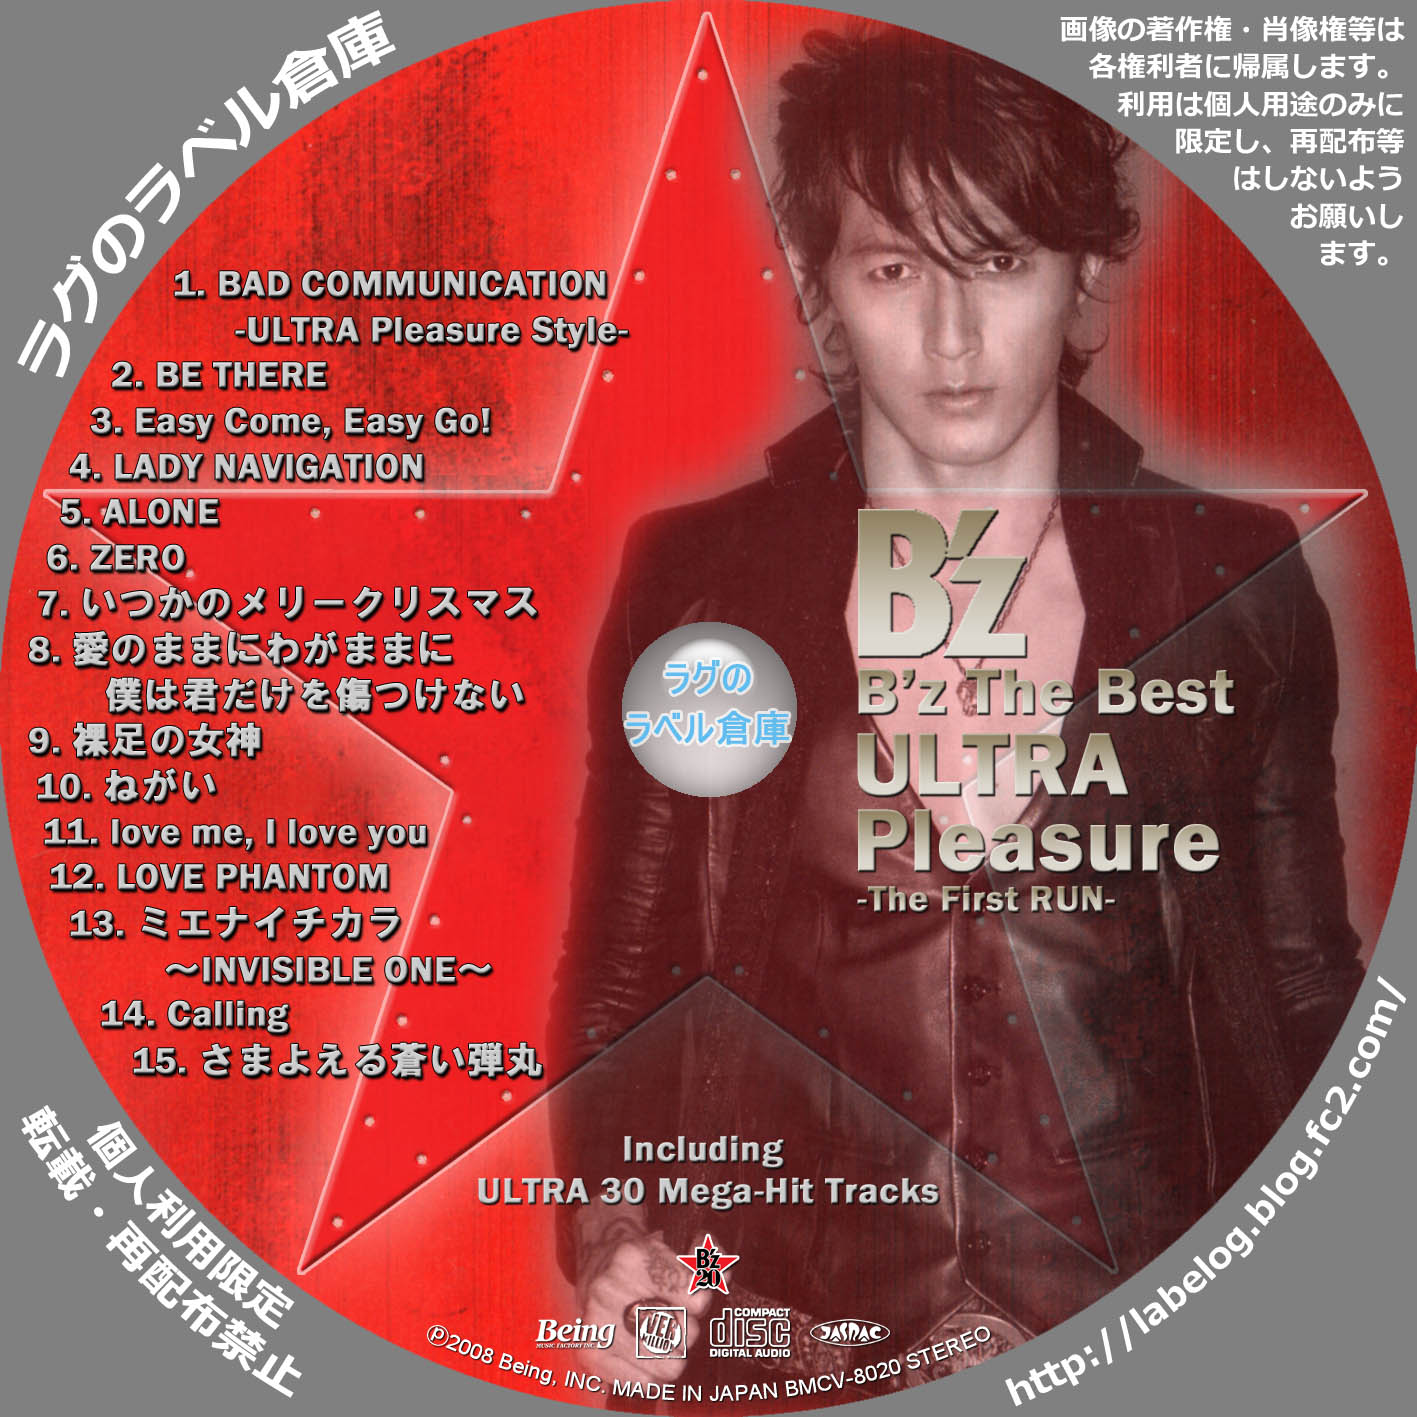 B'z The Best “ULTRA Pleasure” ラグの CD / DVD / BD 自作ラベル倉庫